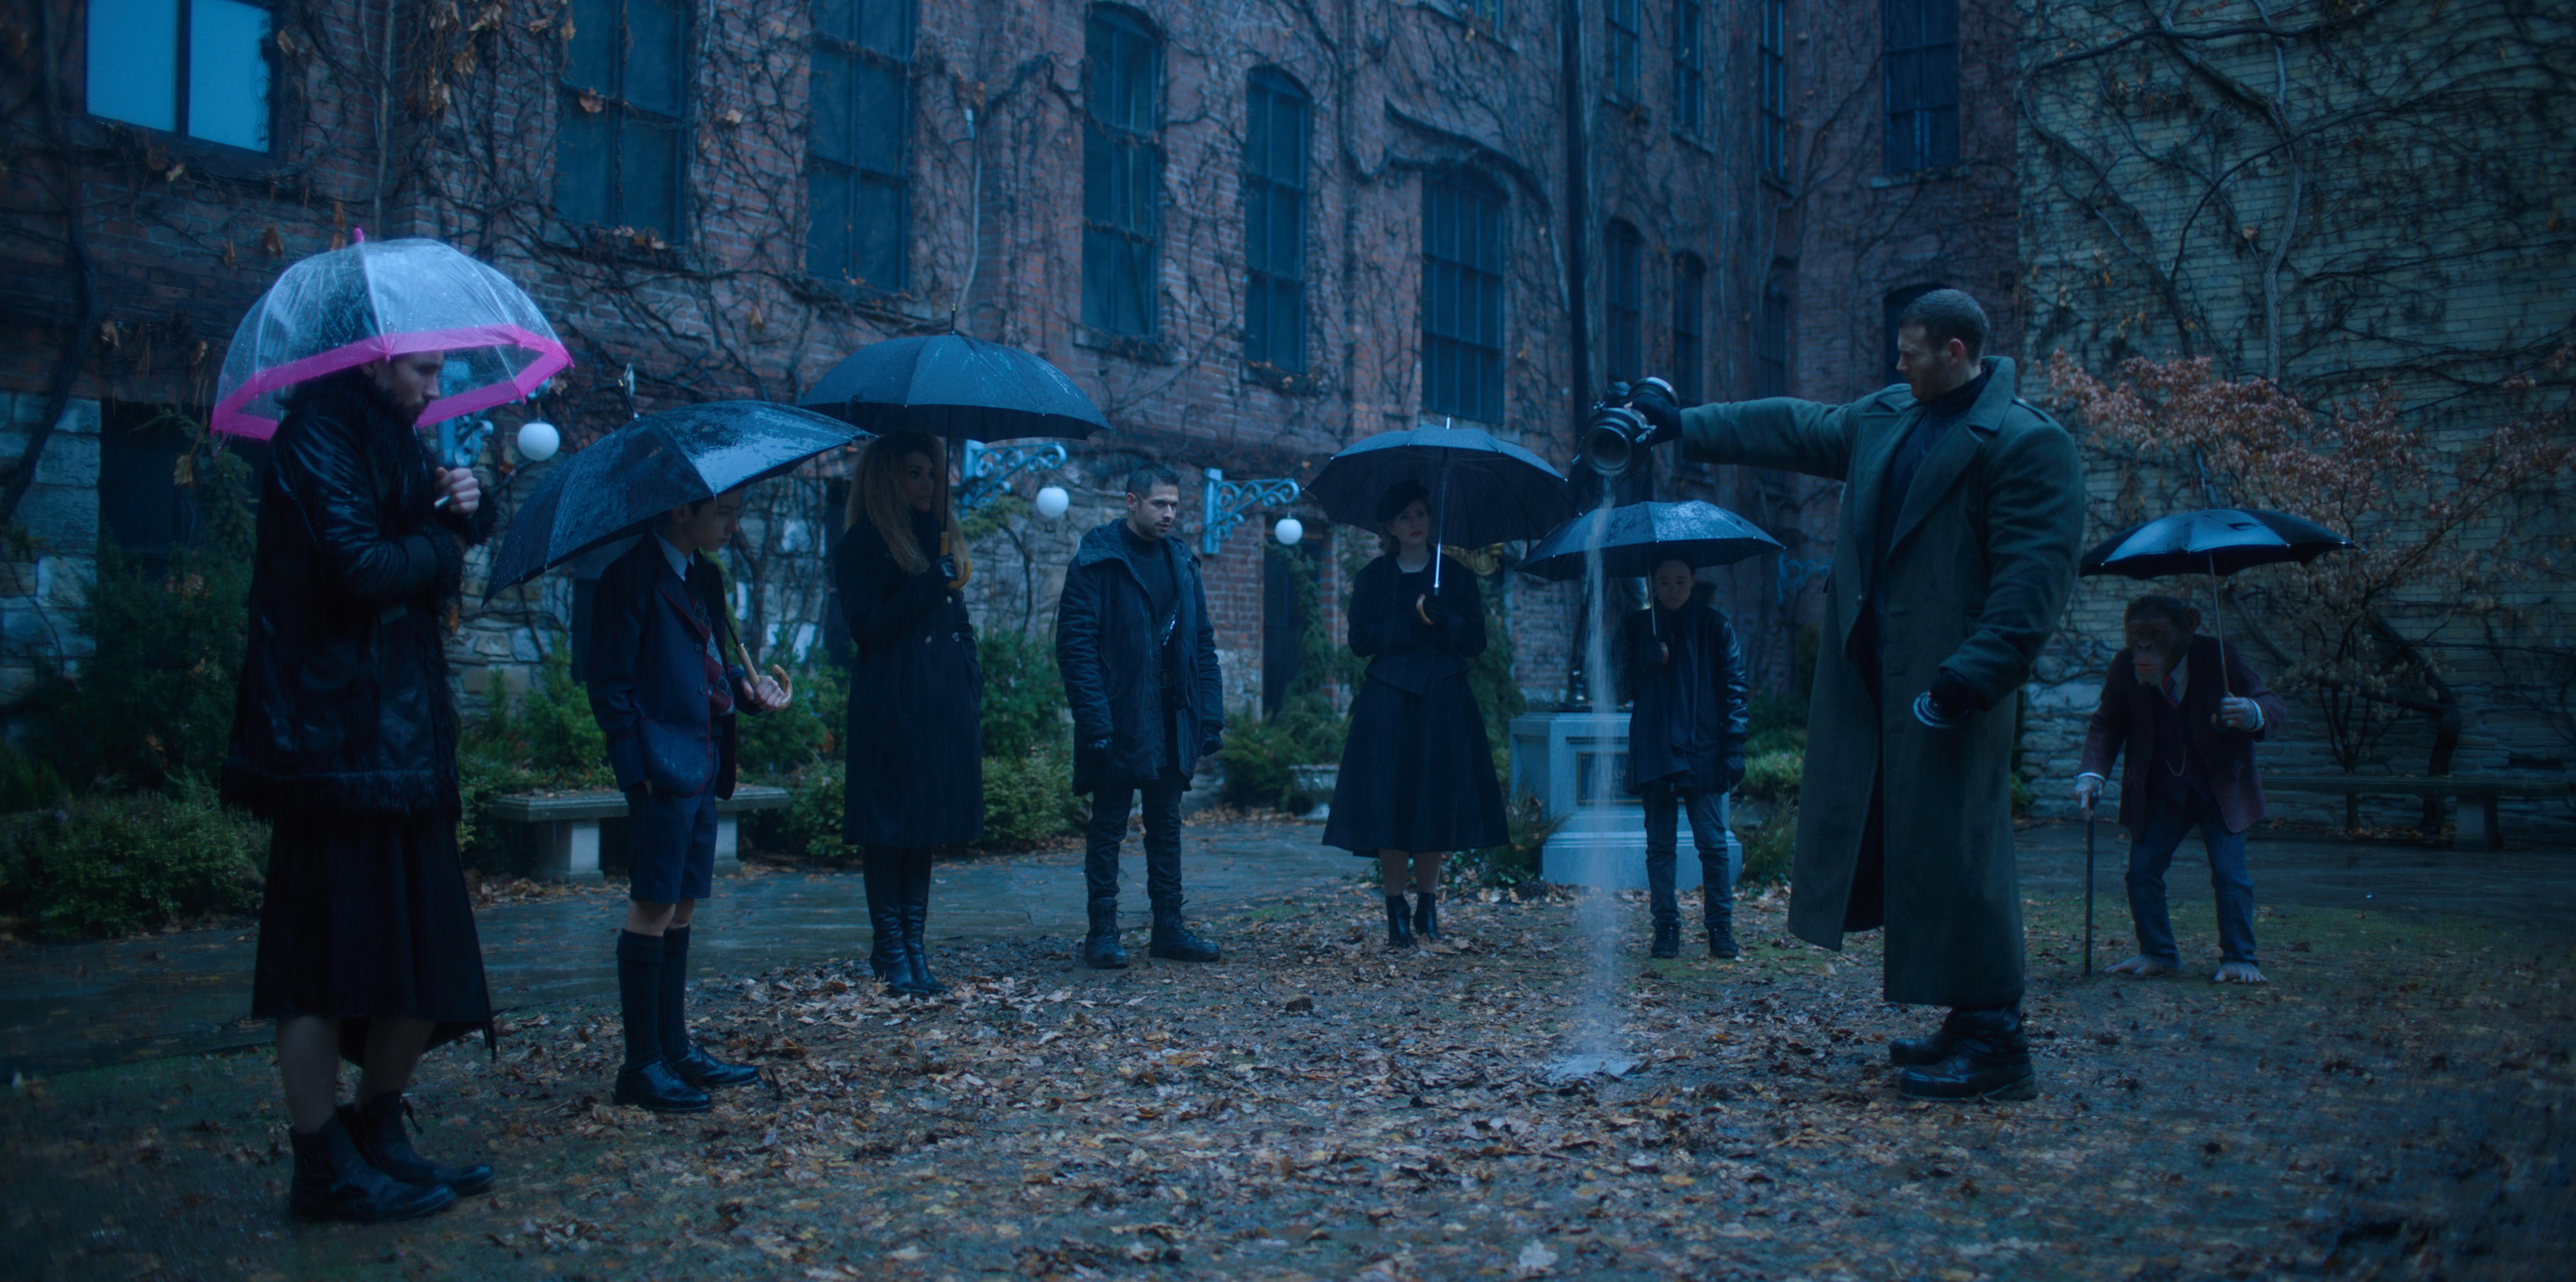 The Umbrella Academy season 2 spoilers release date